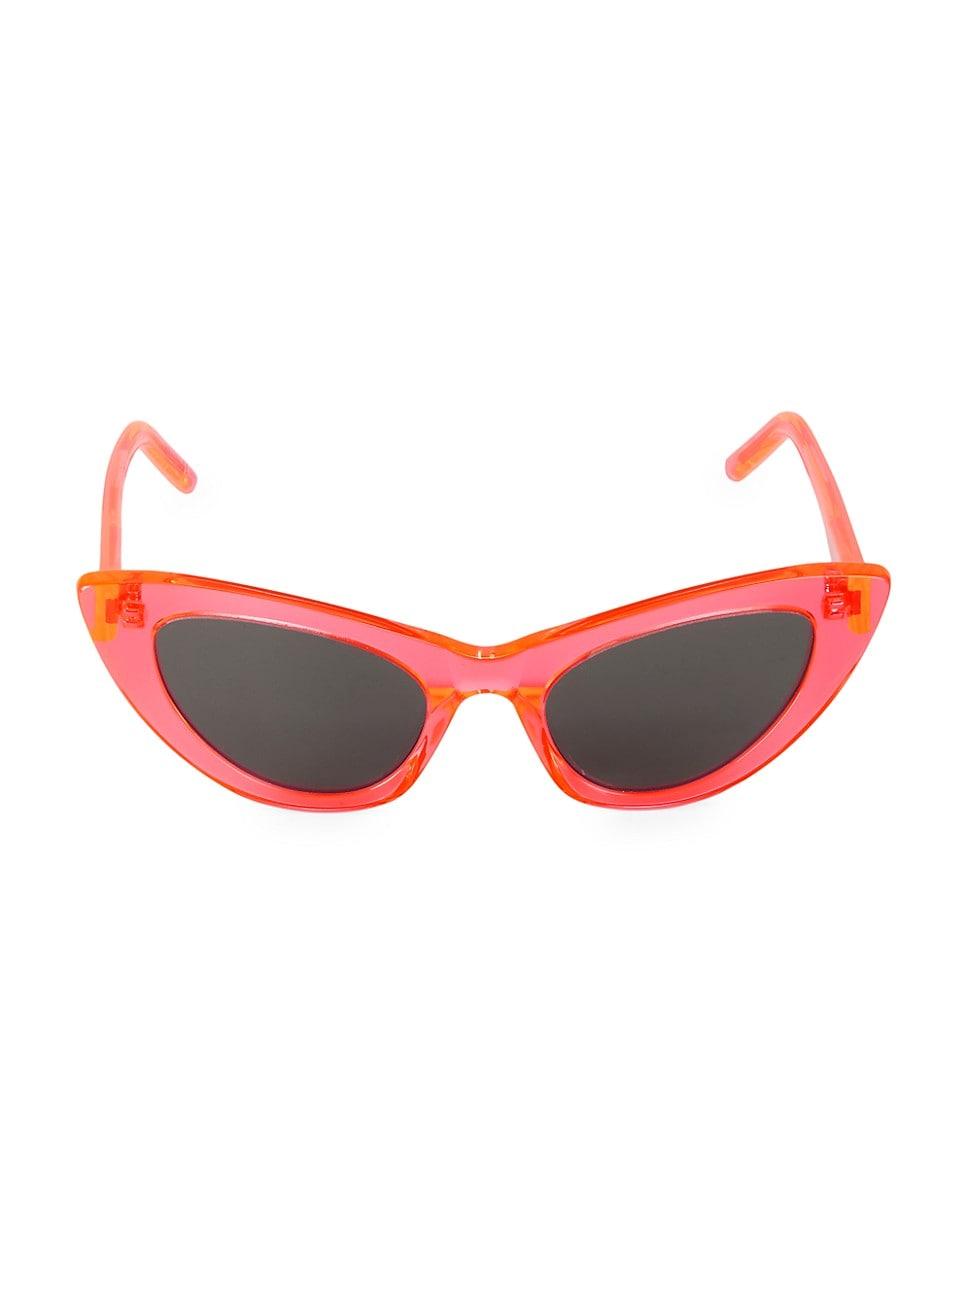 Saint Laurent Lily 52mm Cat Eye Sunglasses in Orange | Lyst